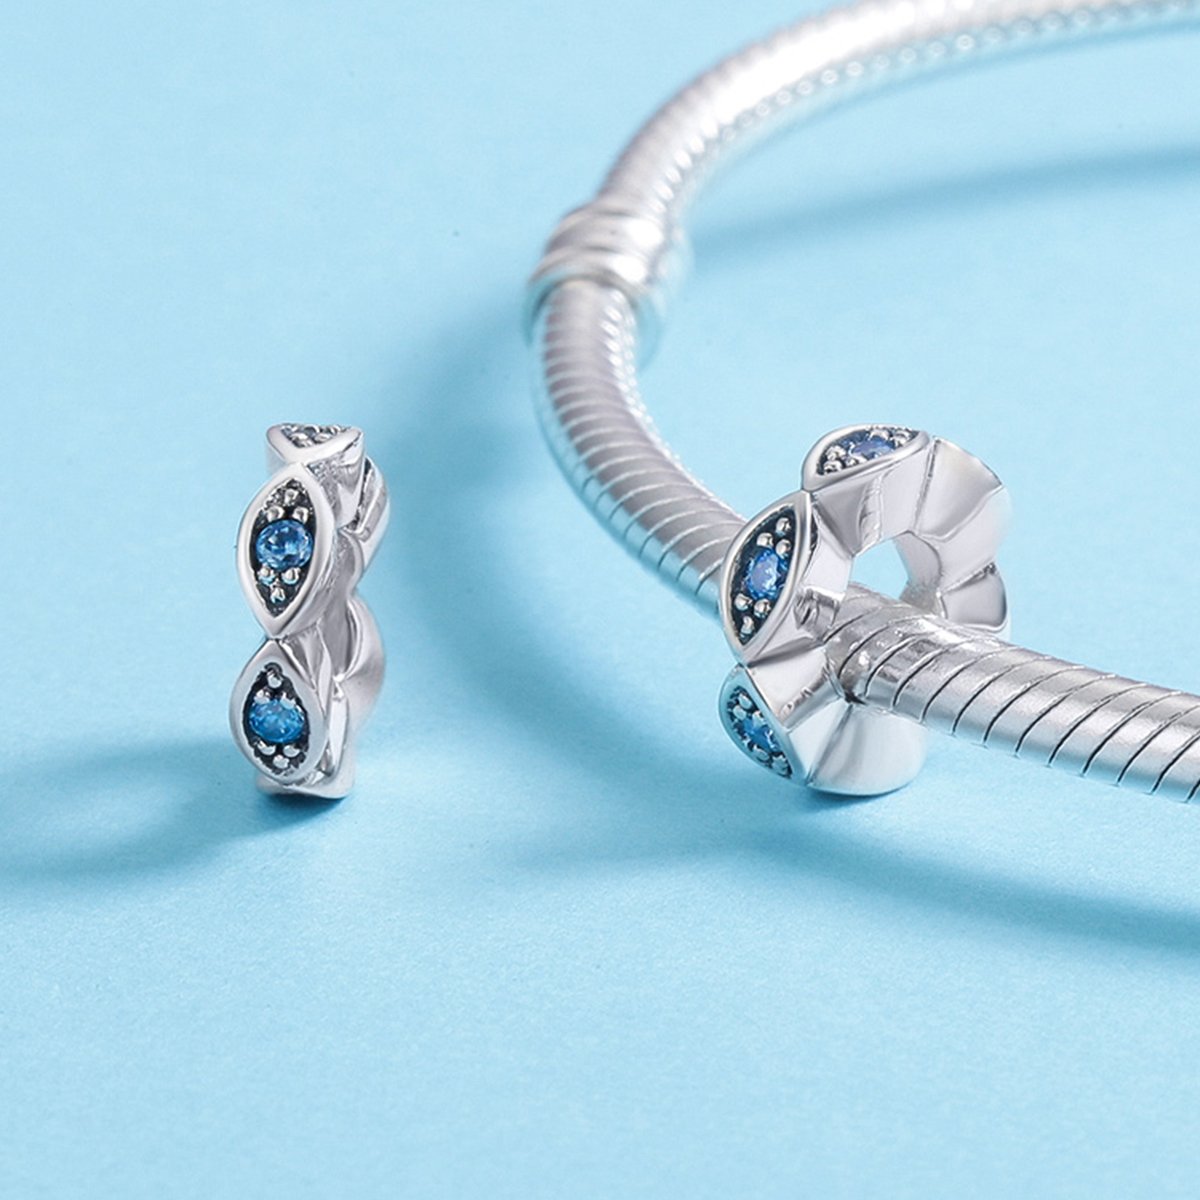 Sterling 925 silver charm the blue eyes bead pendant fits Pandora charm and European charm bracelet Xaxe.com